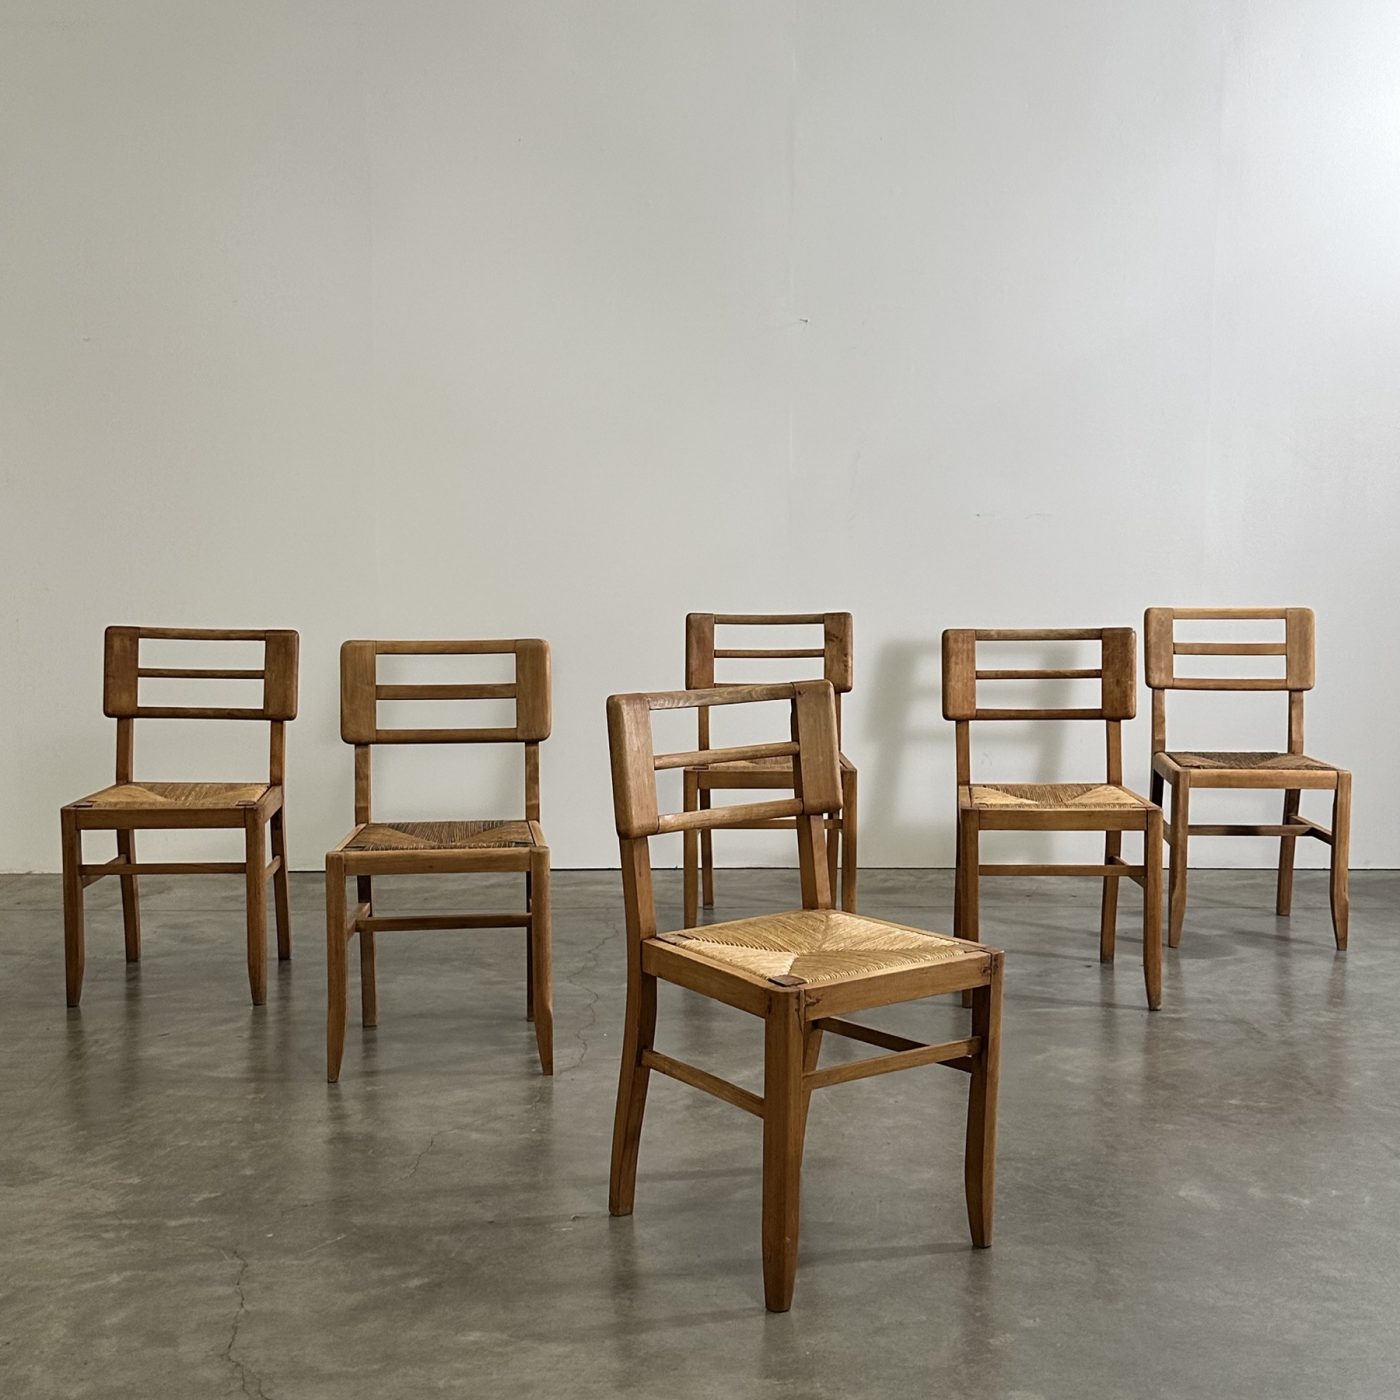 objet-vagabond-cruege-chairs0000